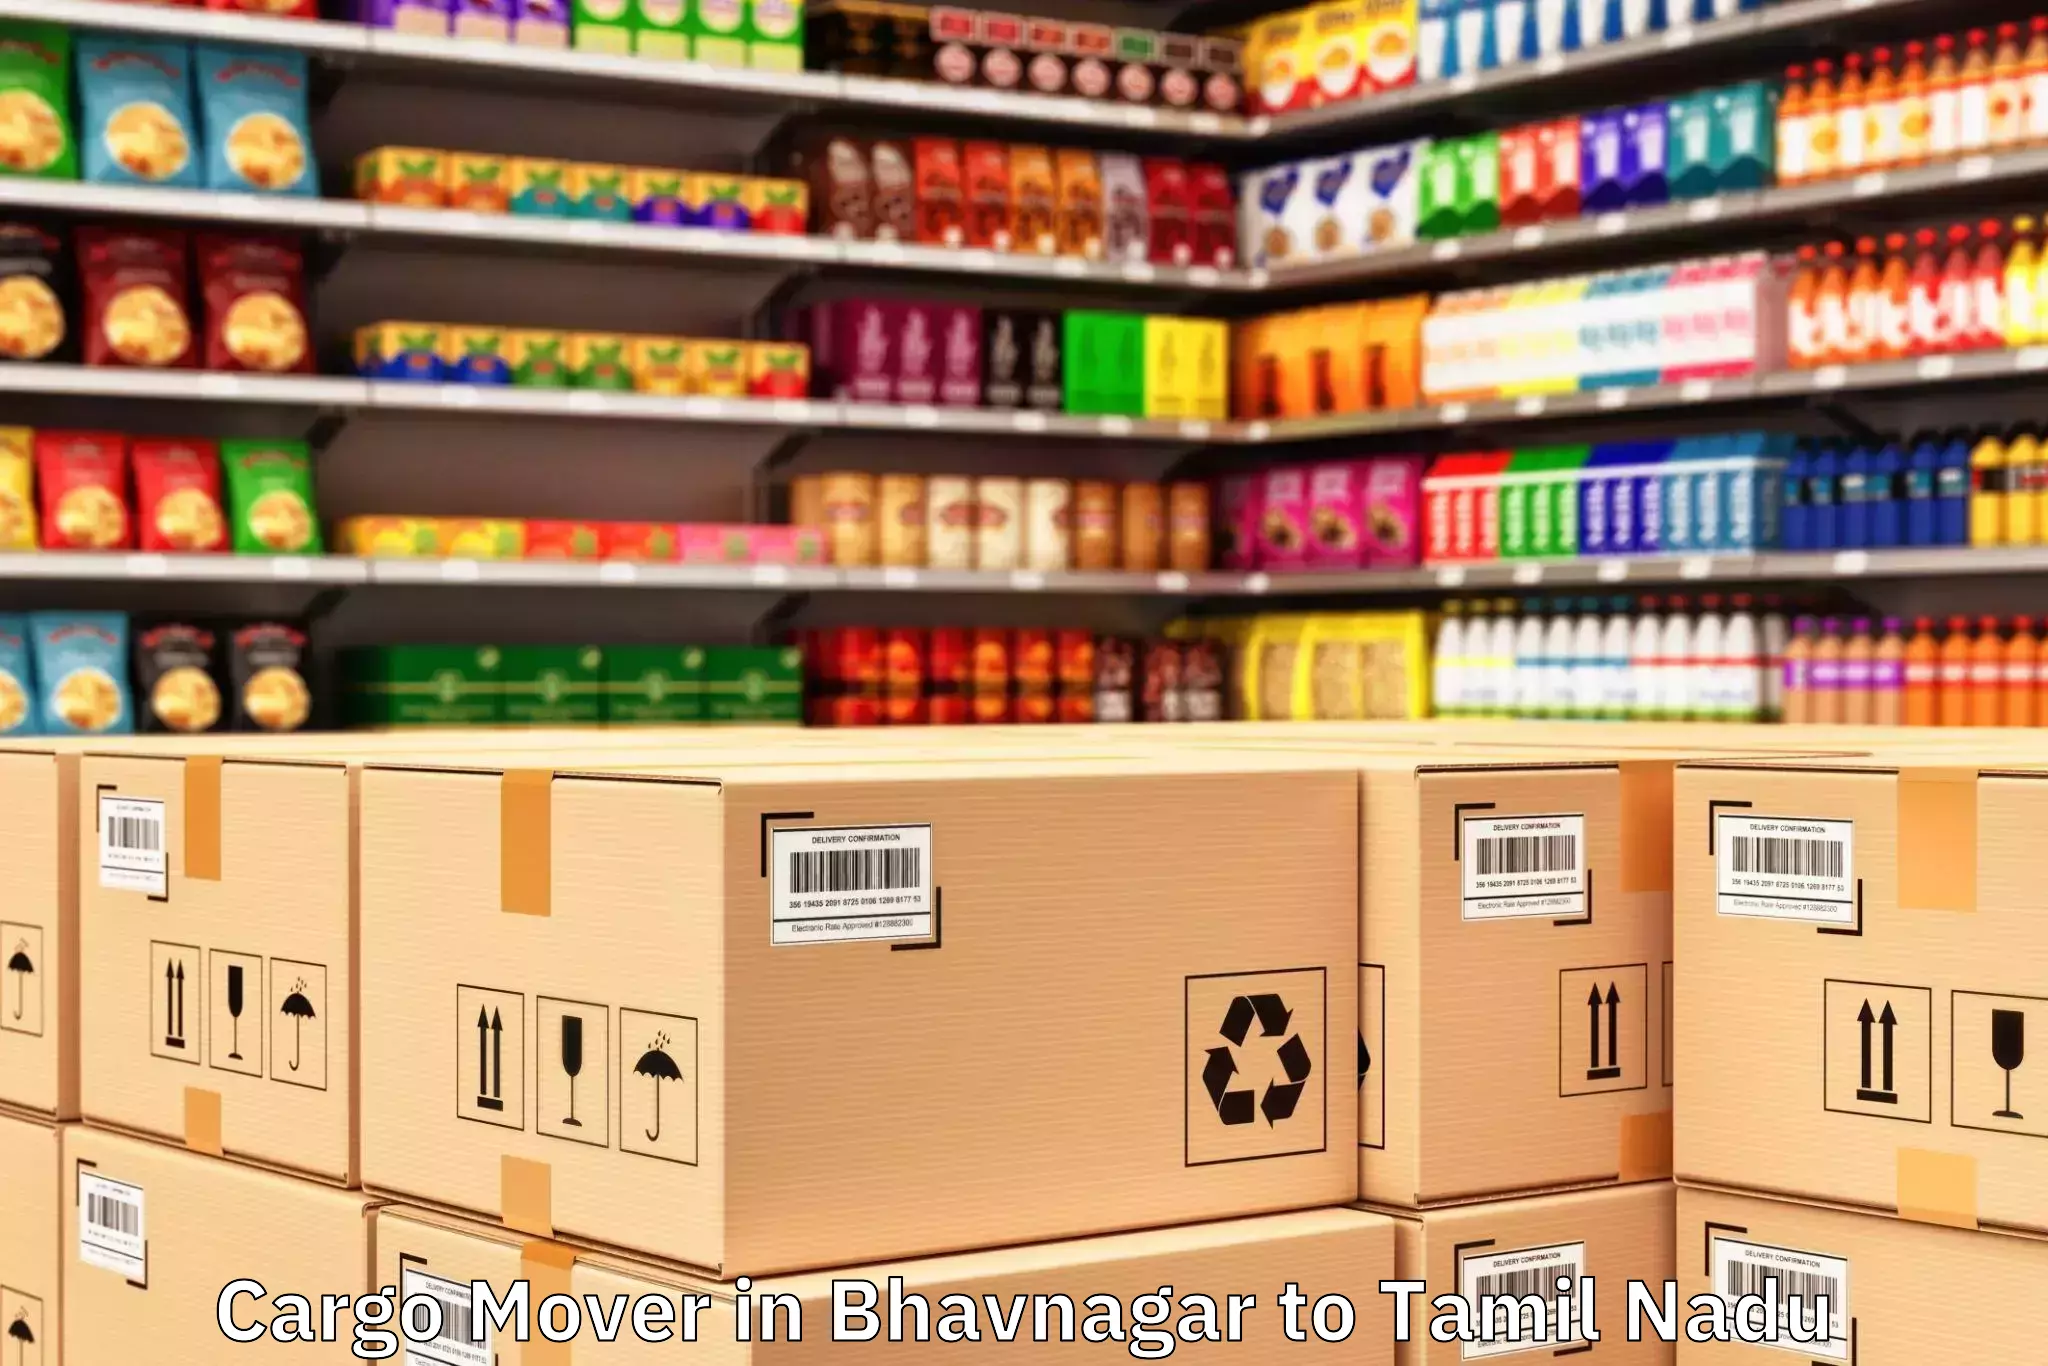 Top Bhavnagar to Tamil Nadu Cargo Mover Available